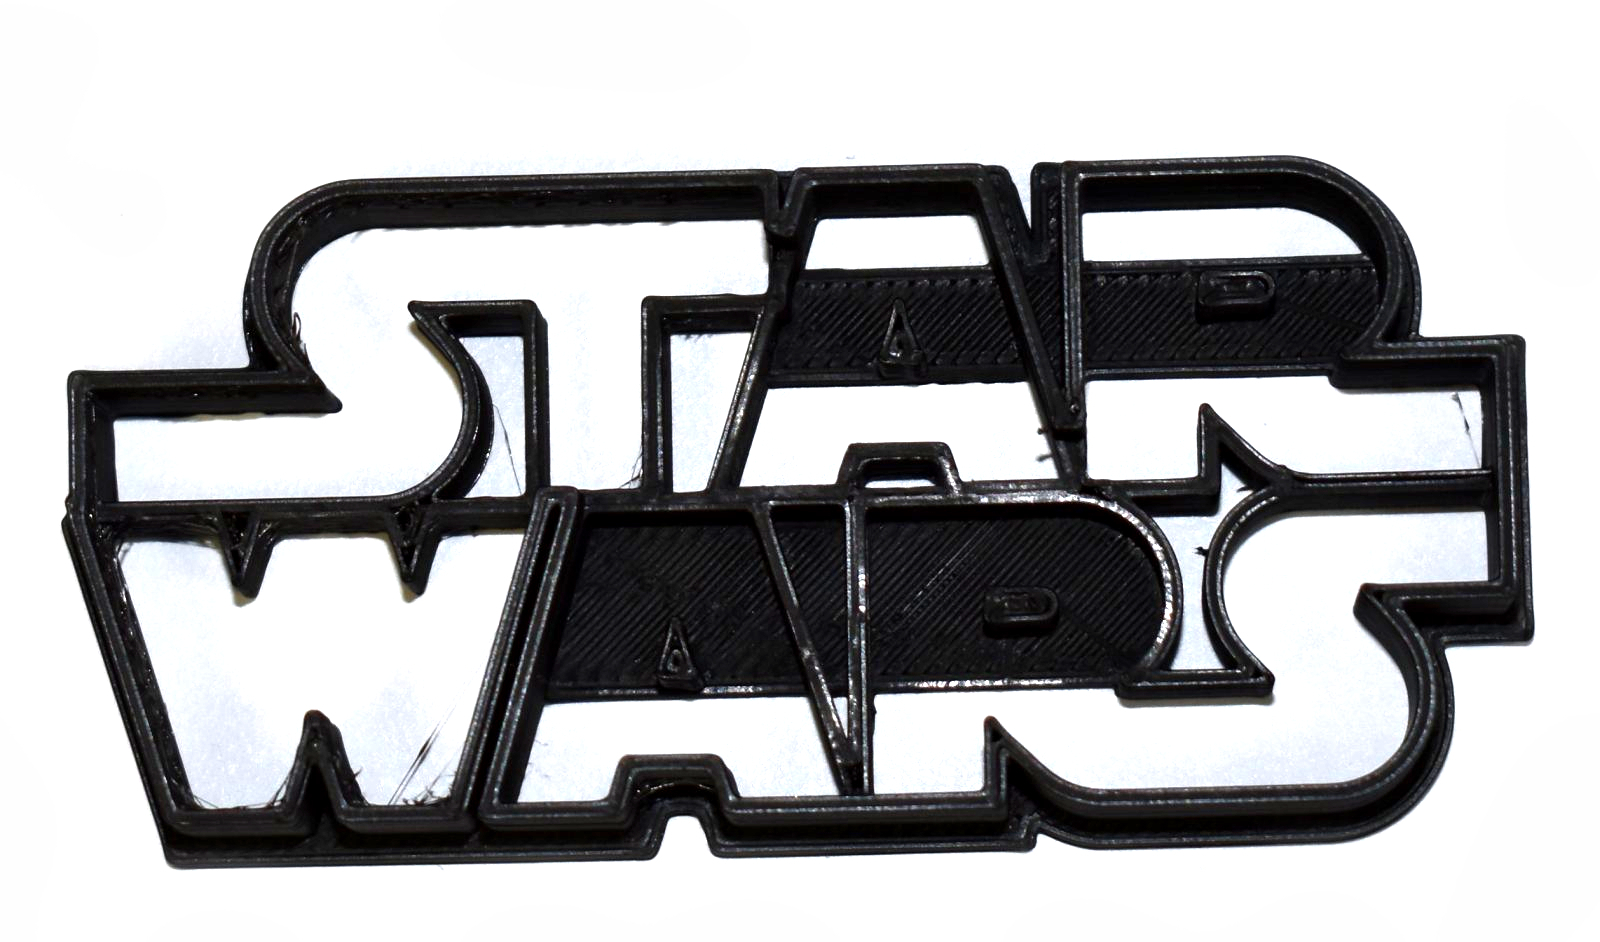 Star Wars Lucas Films Movie Series Space Cookie Cutter 3D Printed USA PR806